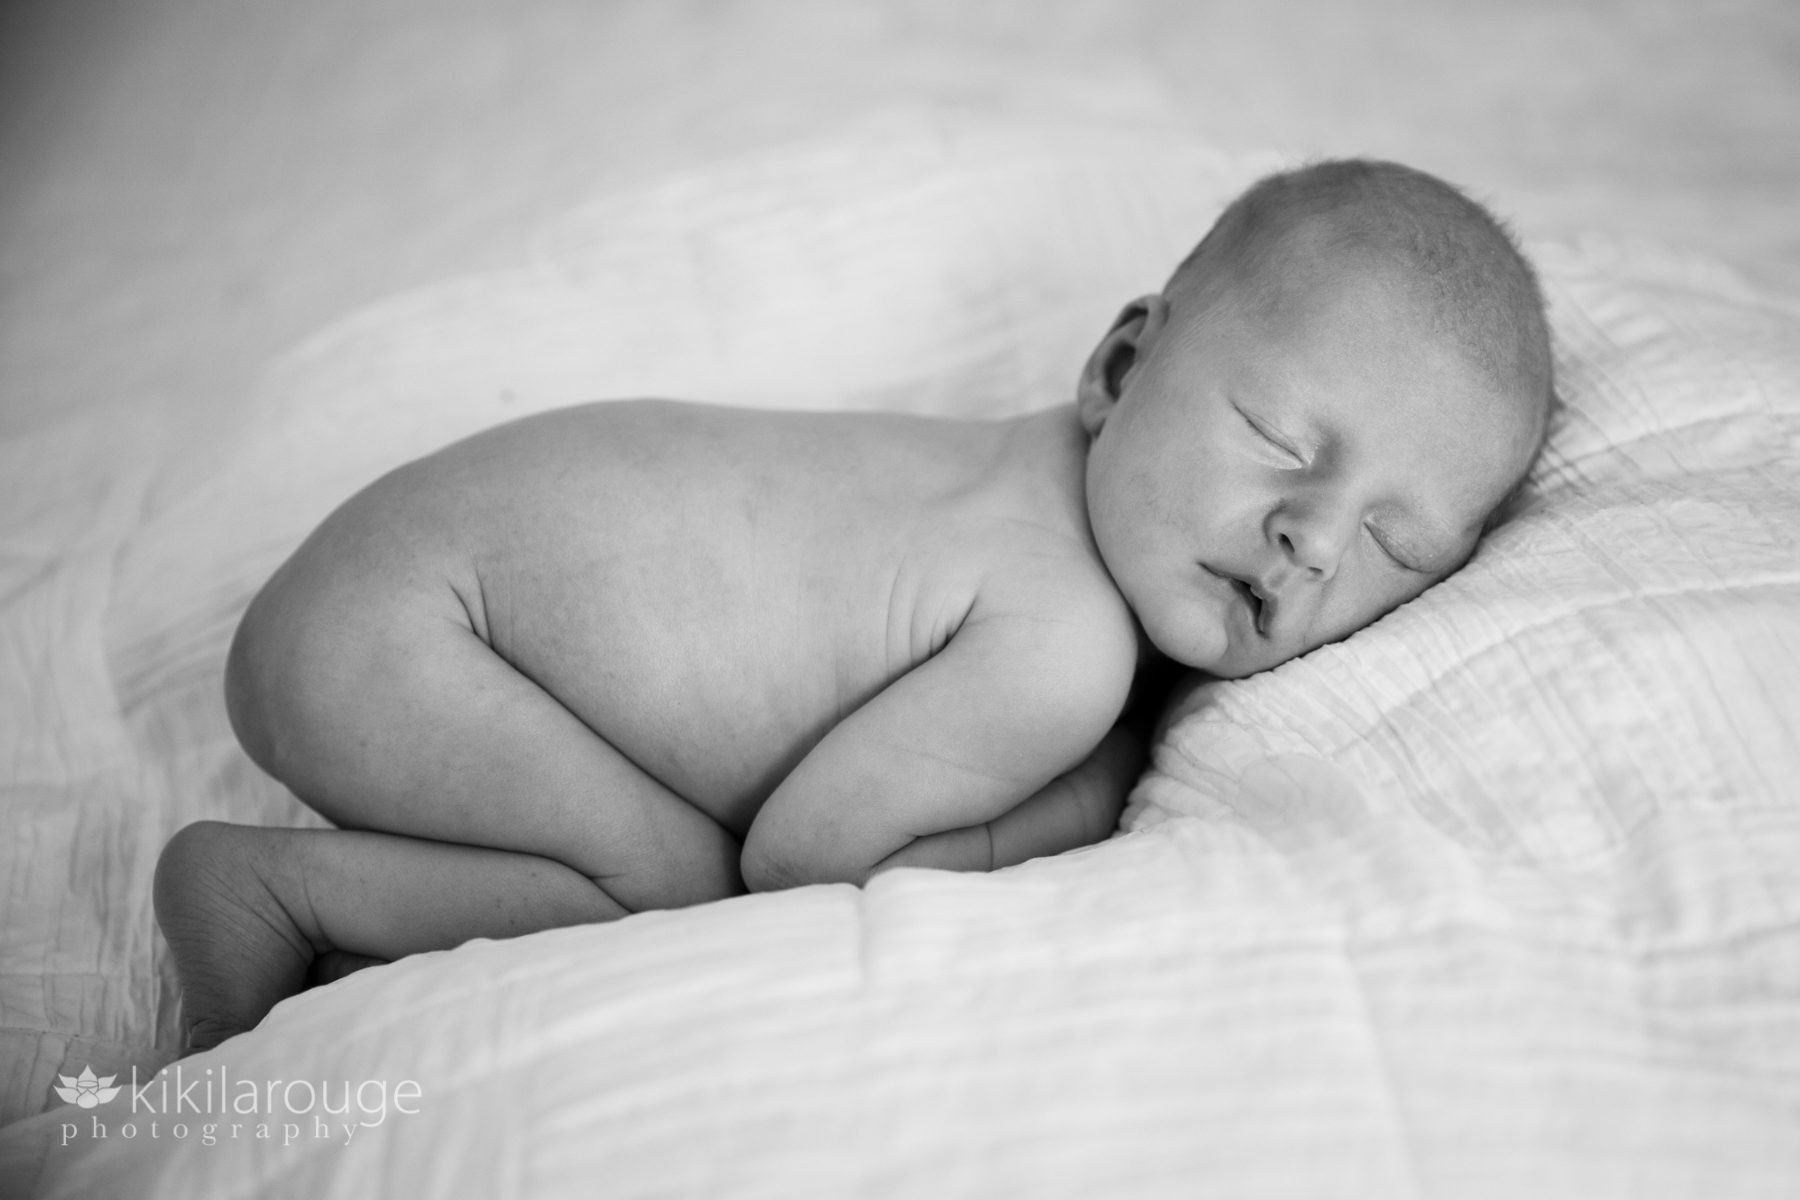 Tiny naked newborn baby snuggled up on bed sleeping